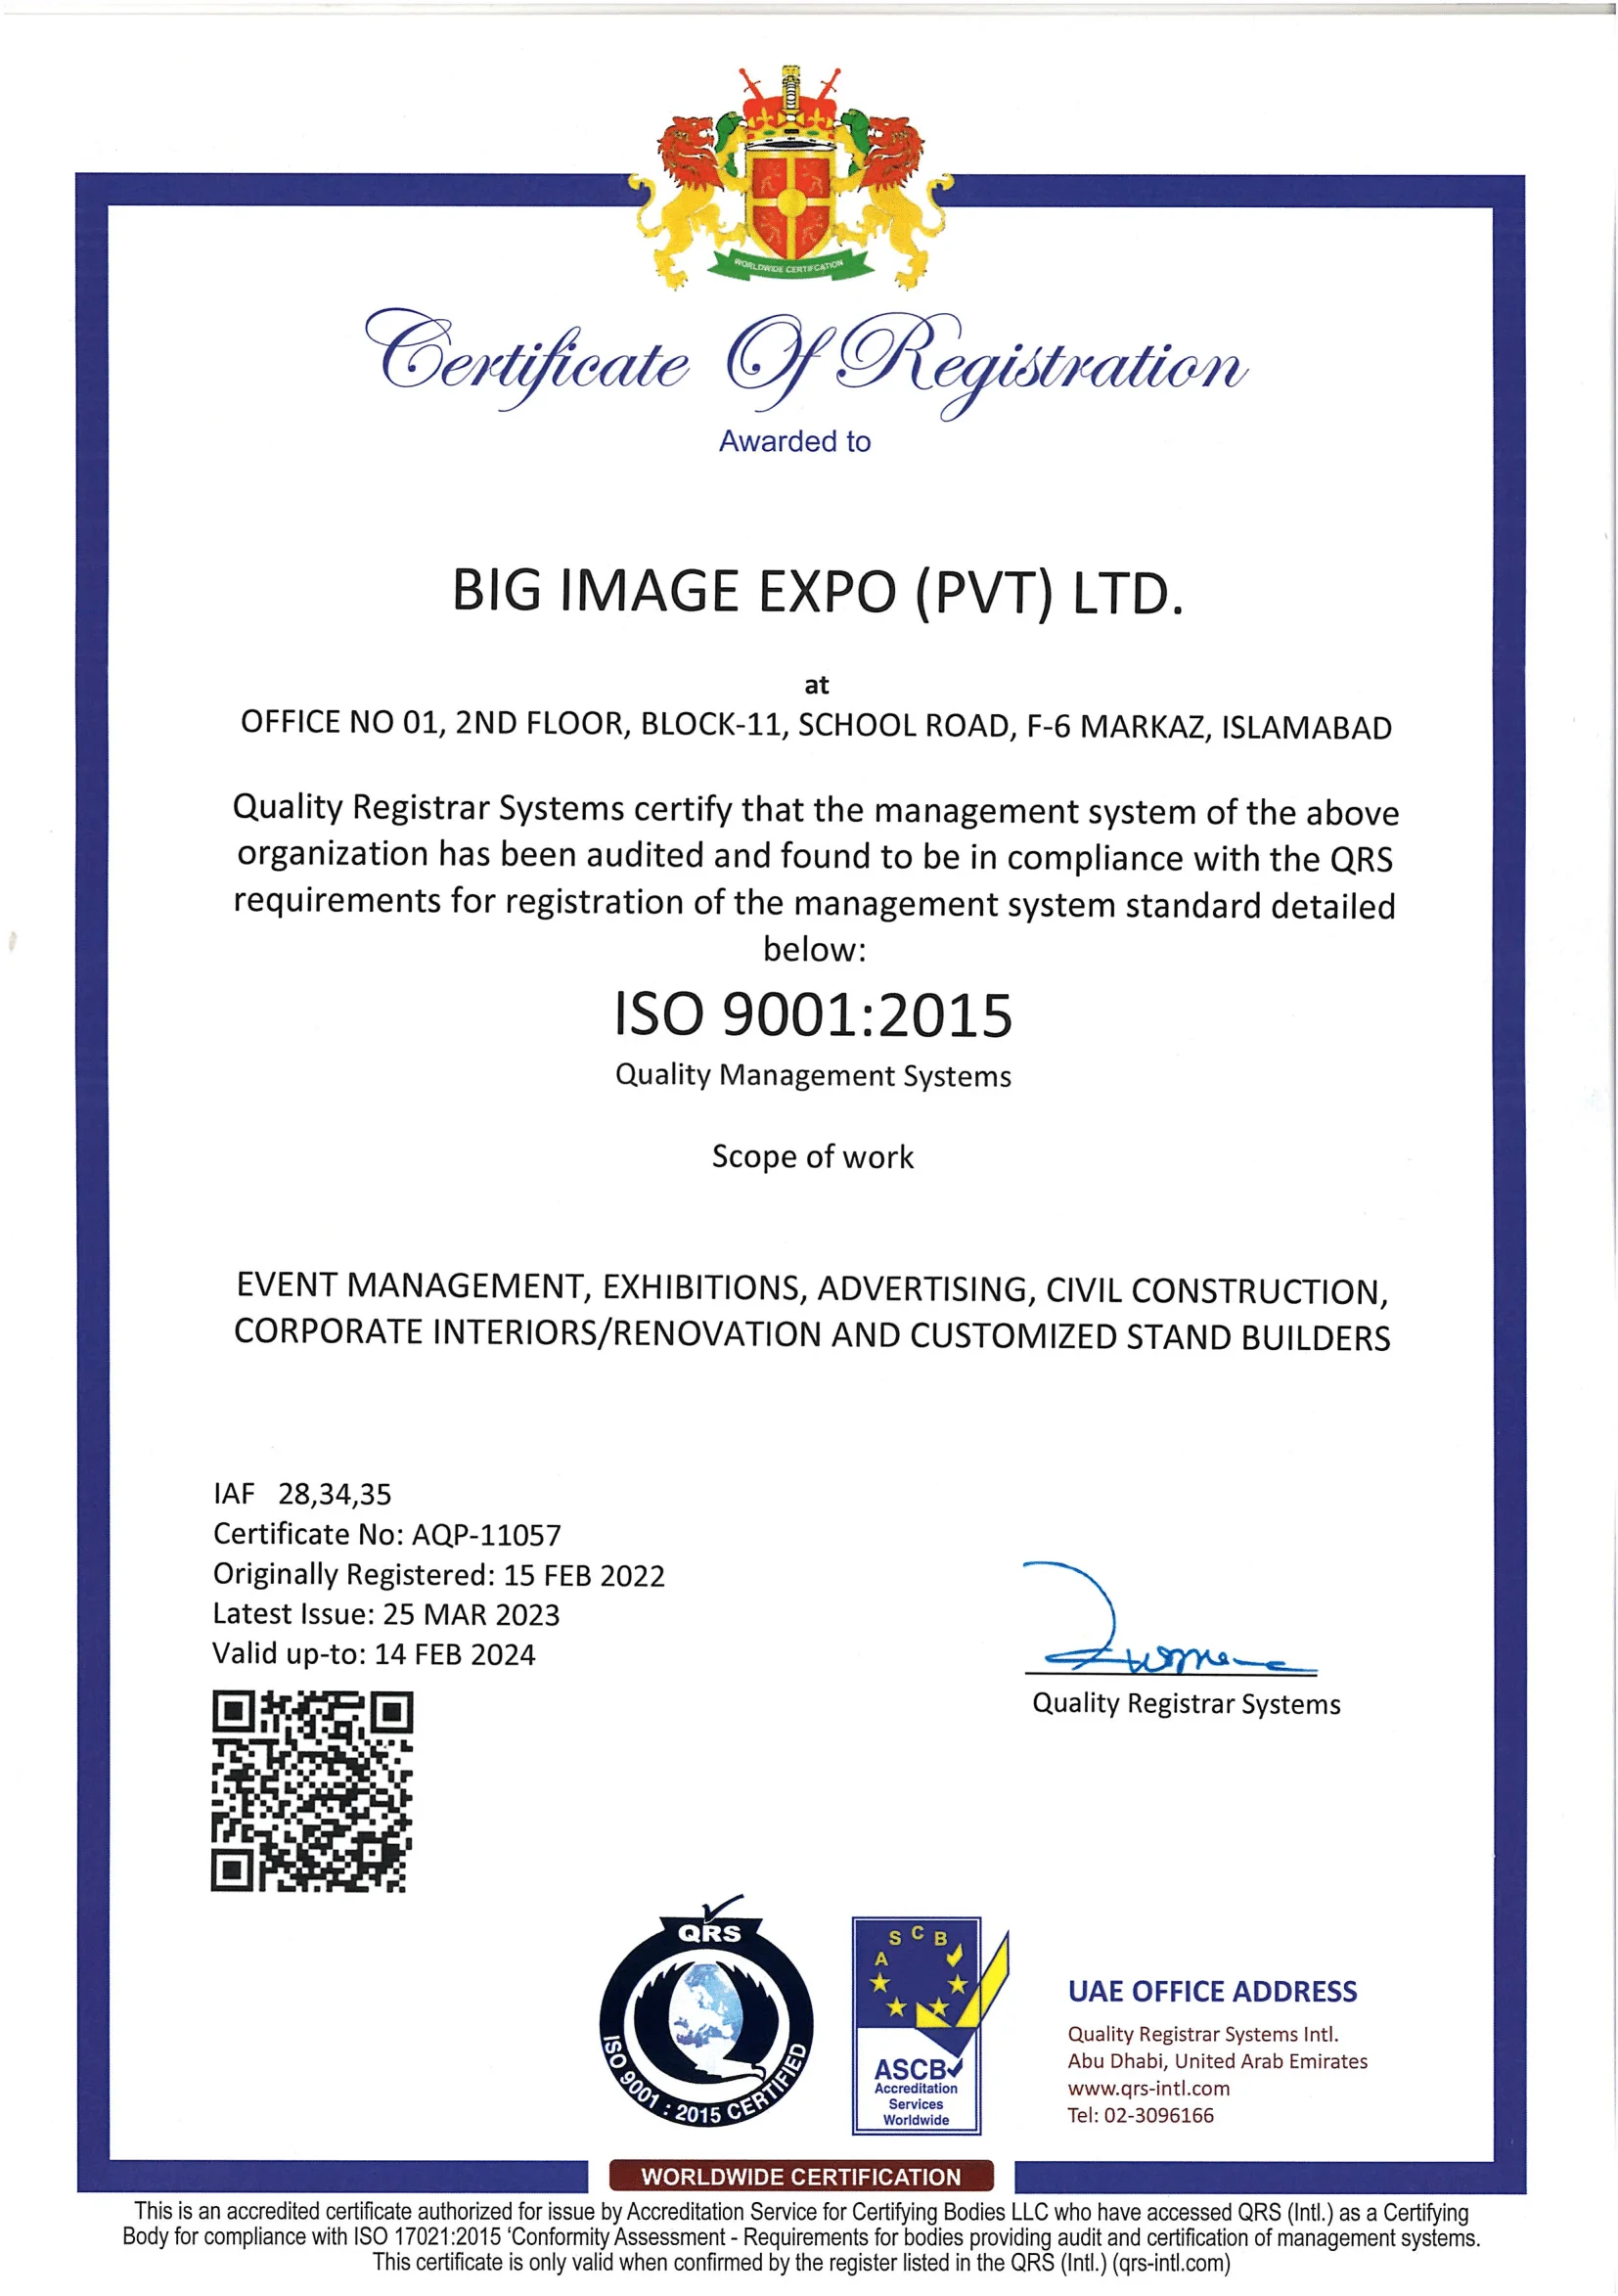 ISO-Certification-_QMS-_BIE-1